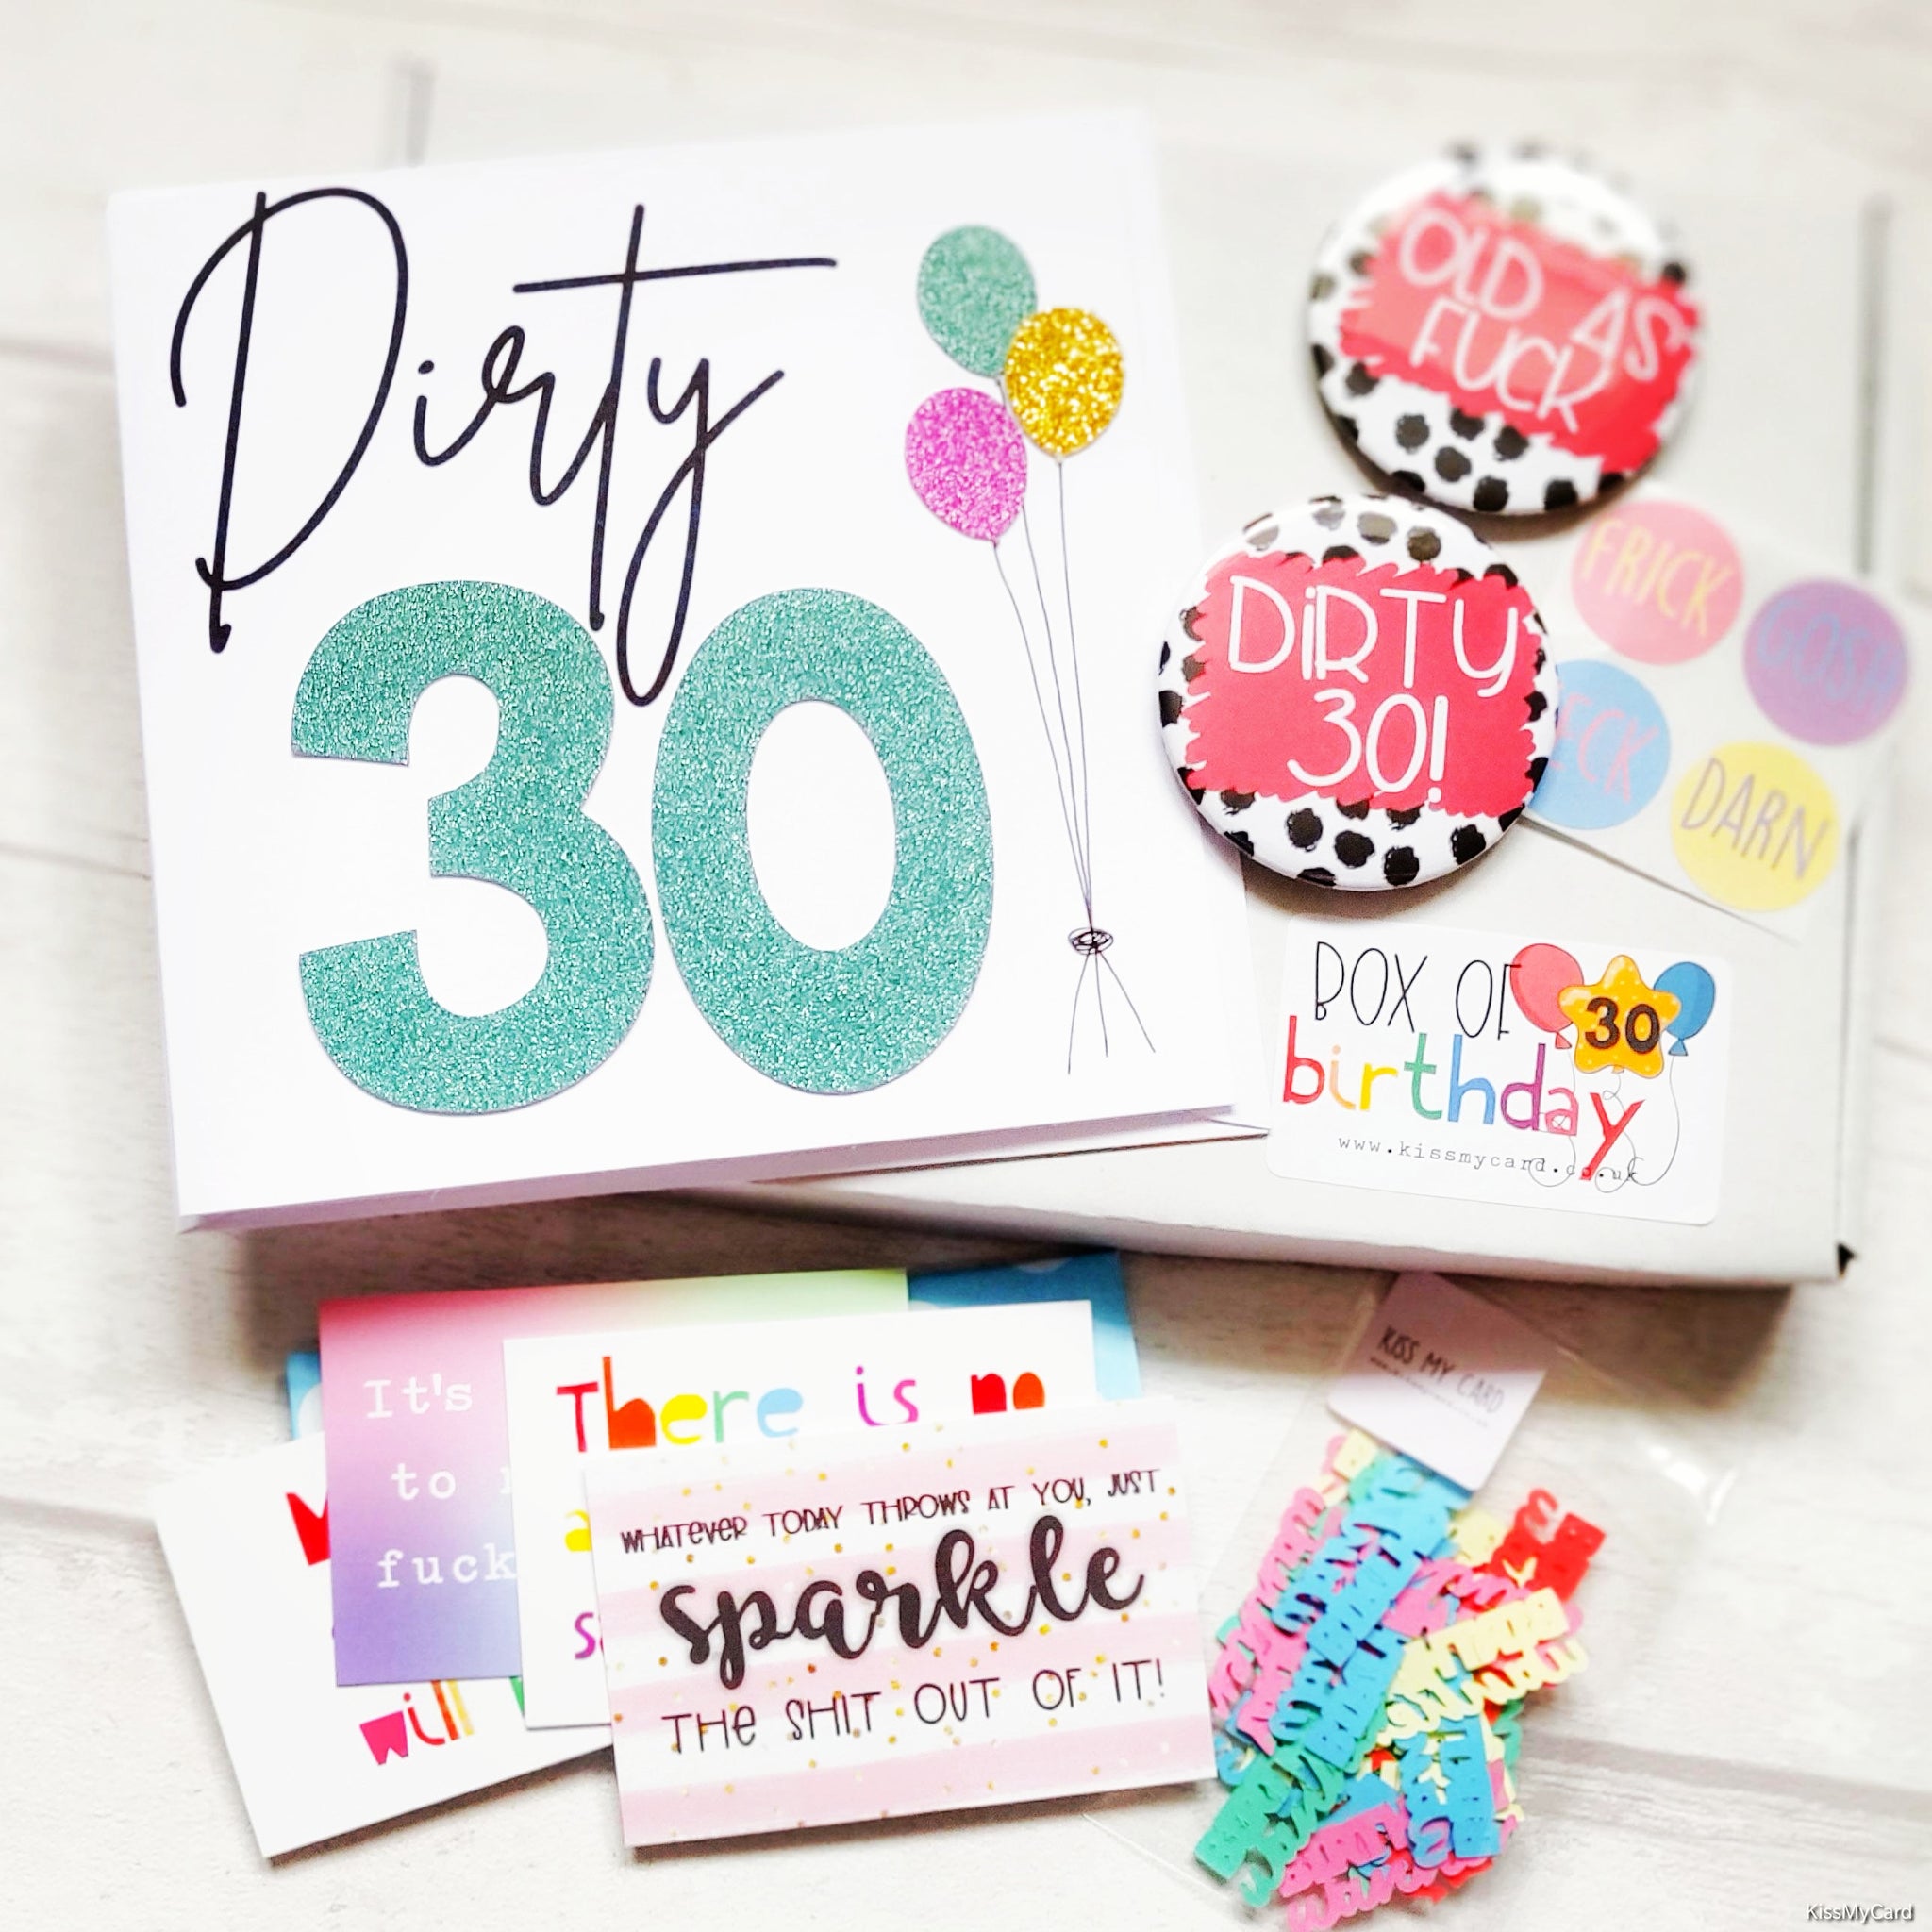 Box of 30 Birthday Box